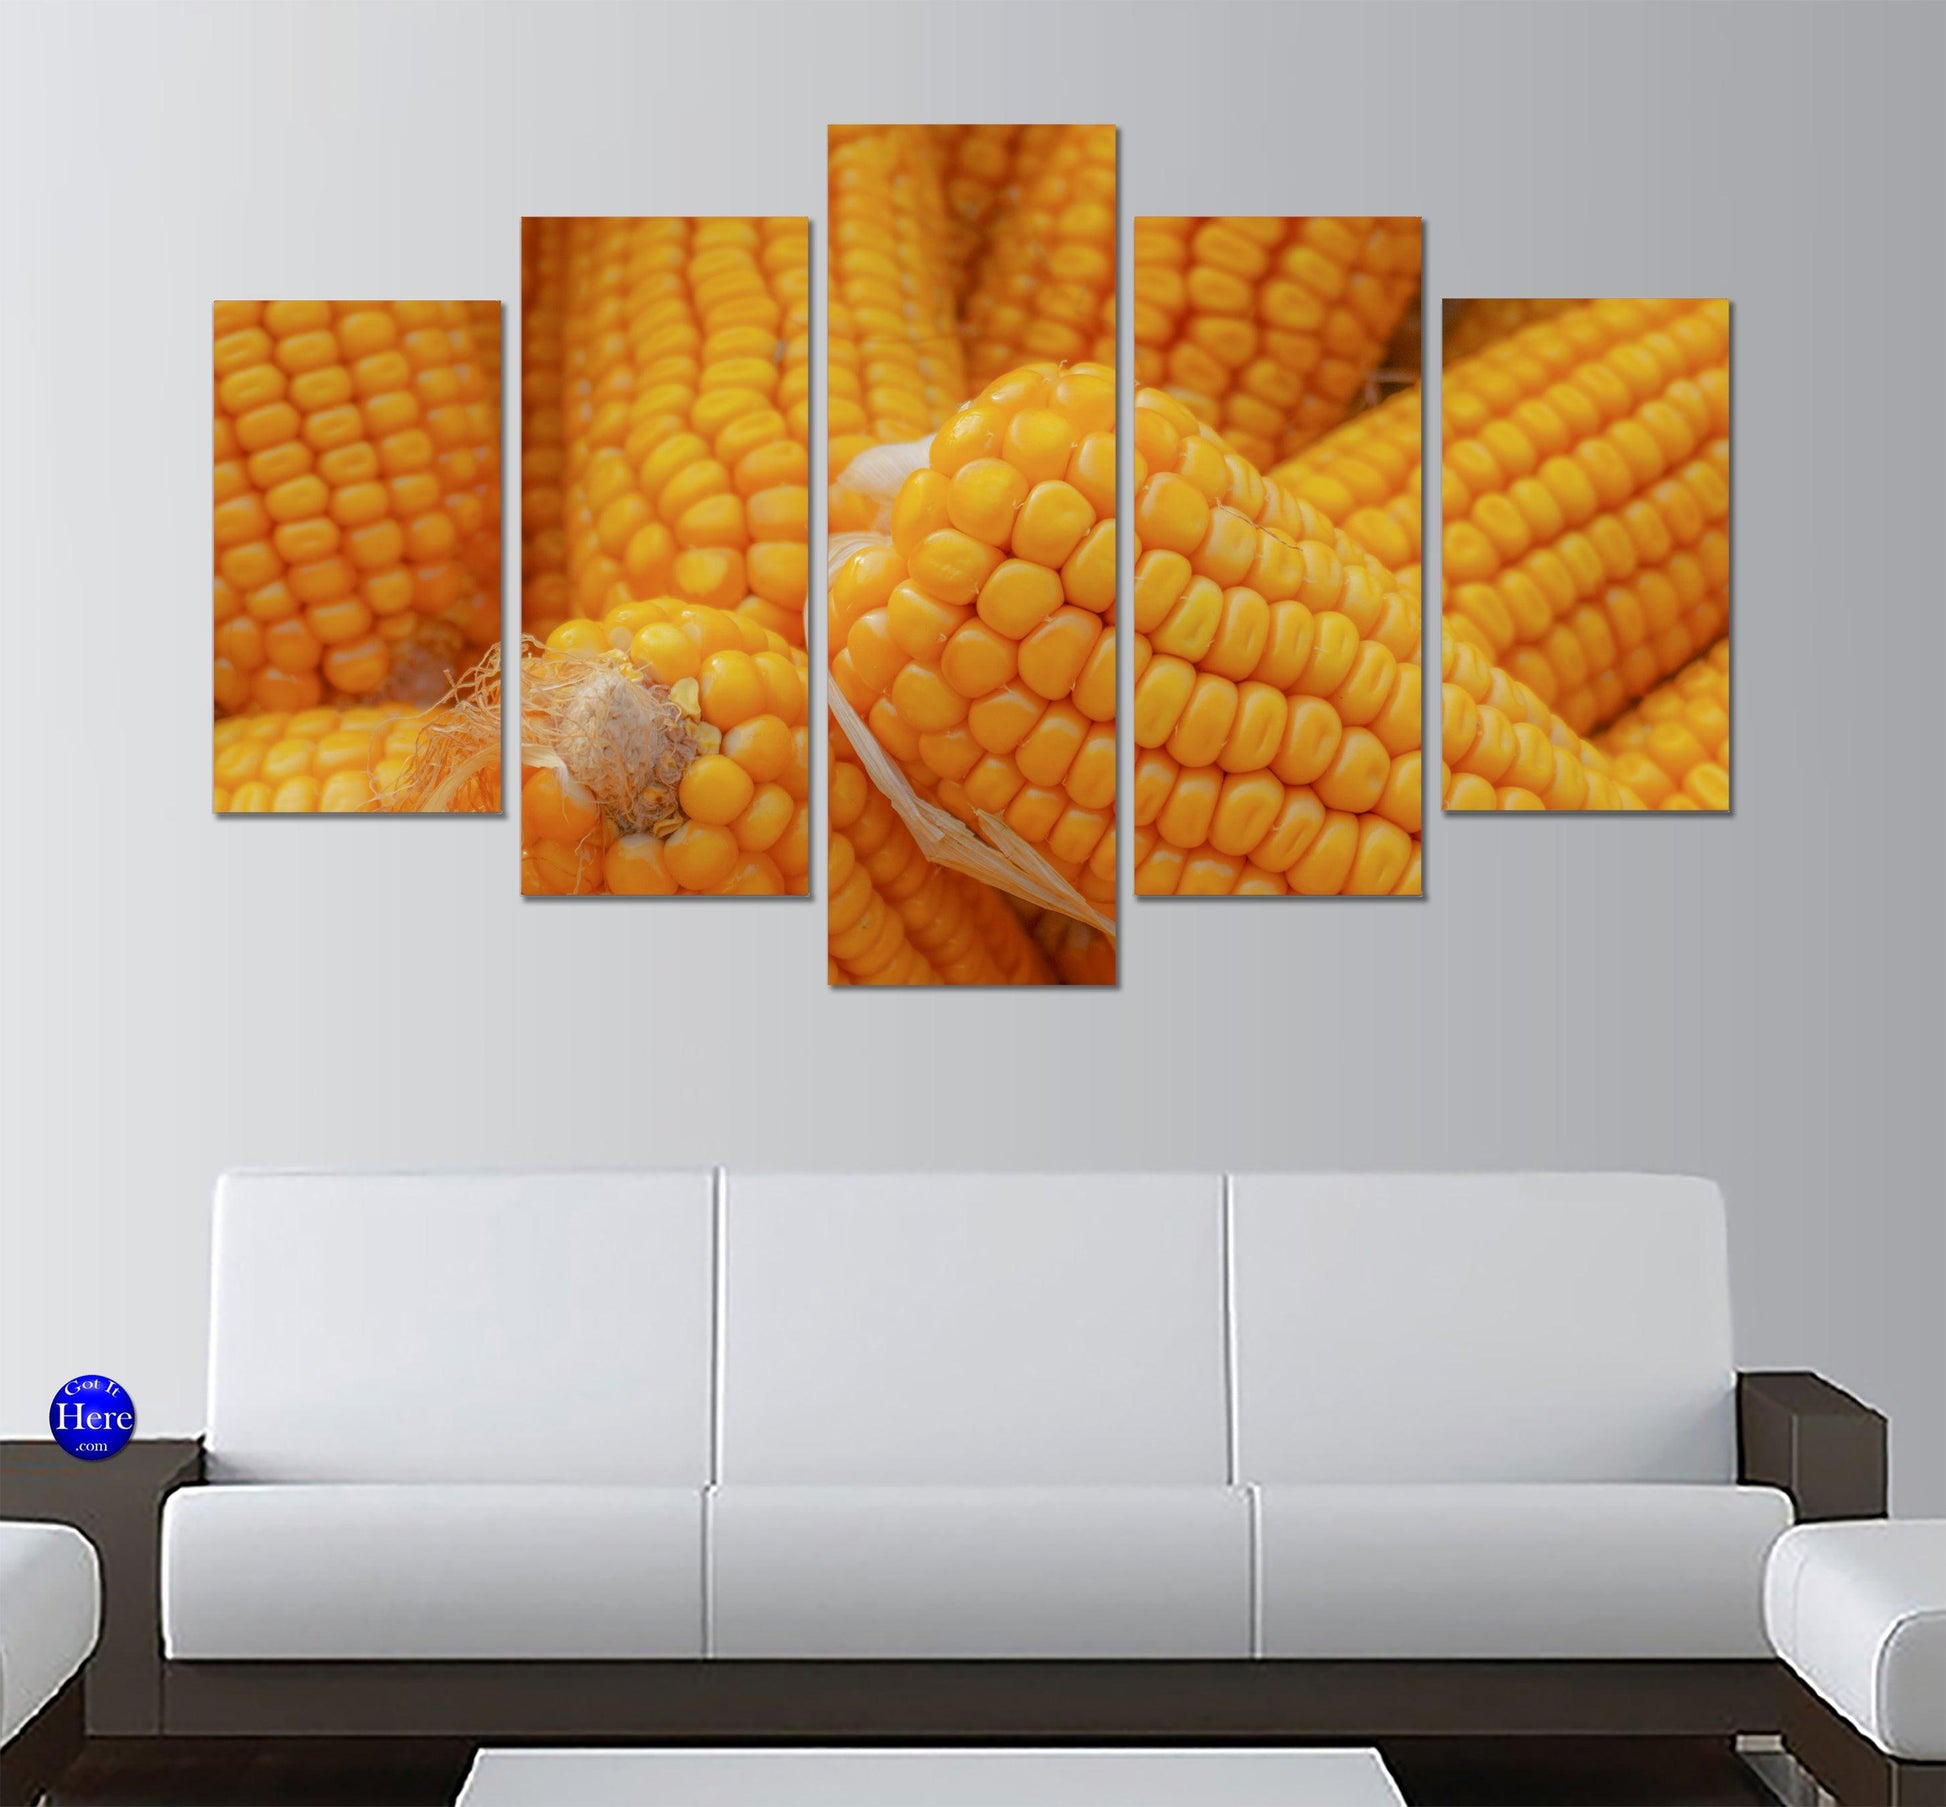 Ears Of Corn Closeup 5 Panel Canvas Print Wall Art - GotItHere.com